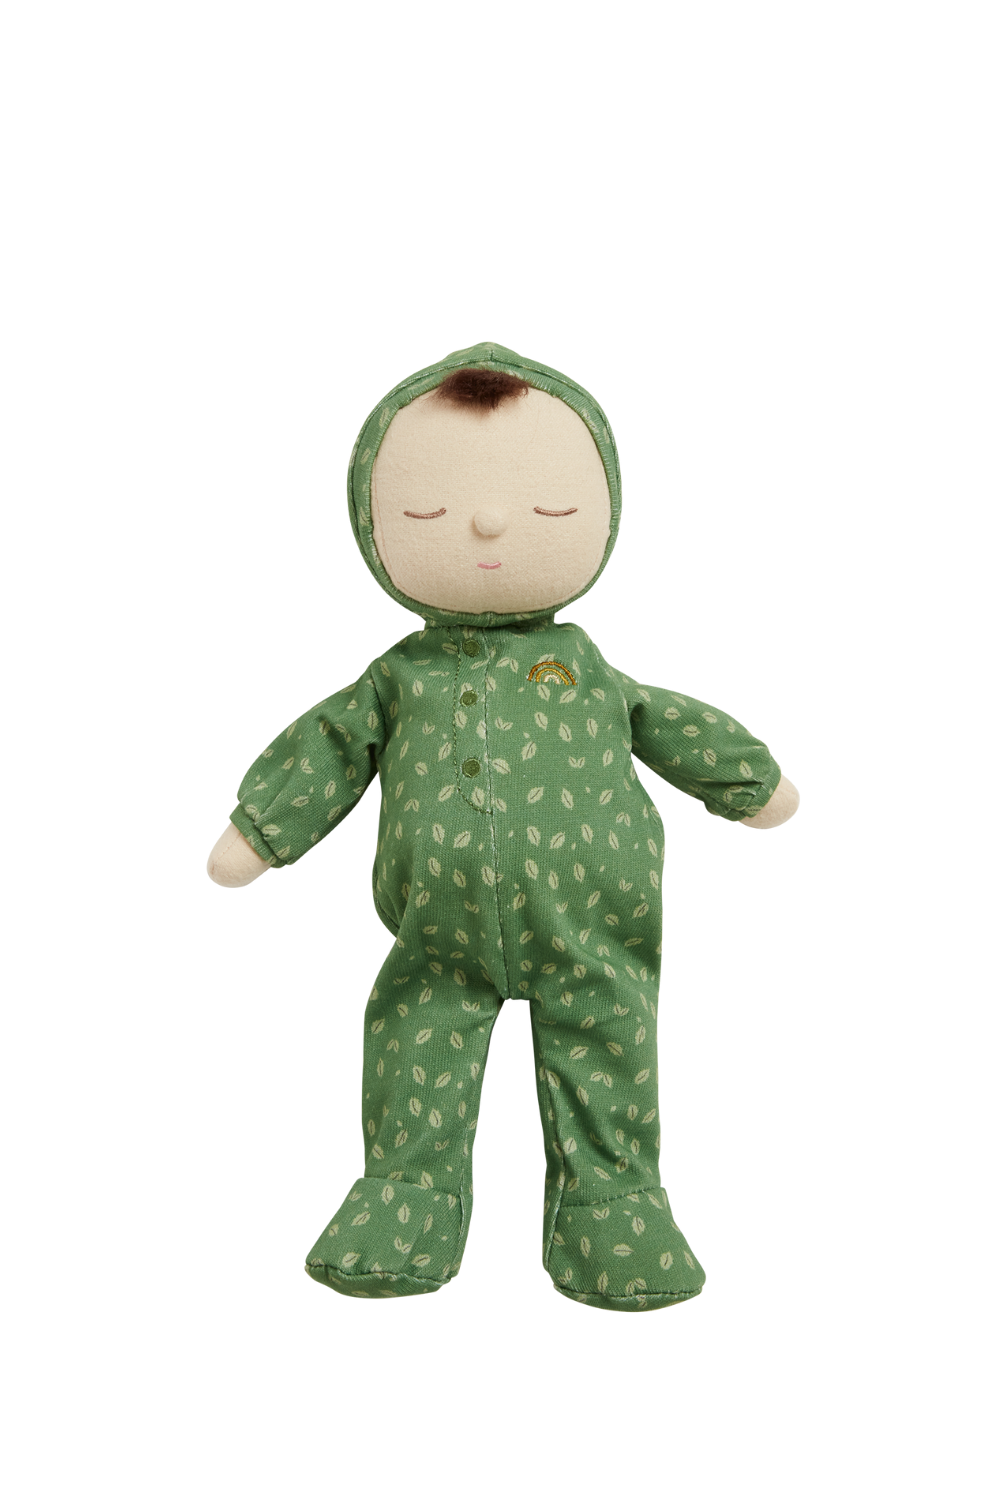 Olli Ella Dozy Dinkum Doll - Pudding (Forest Green)